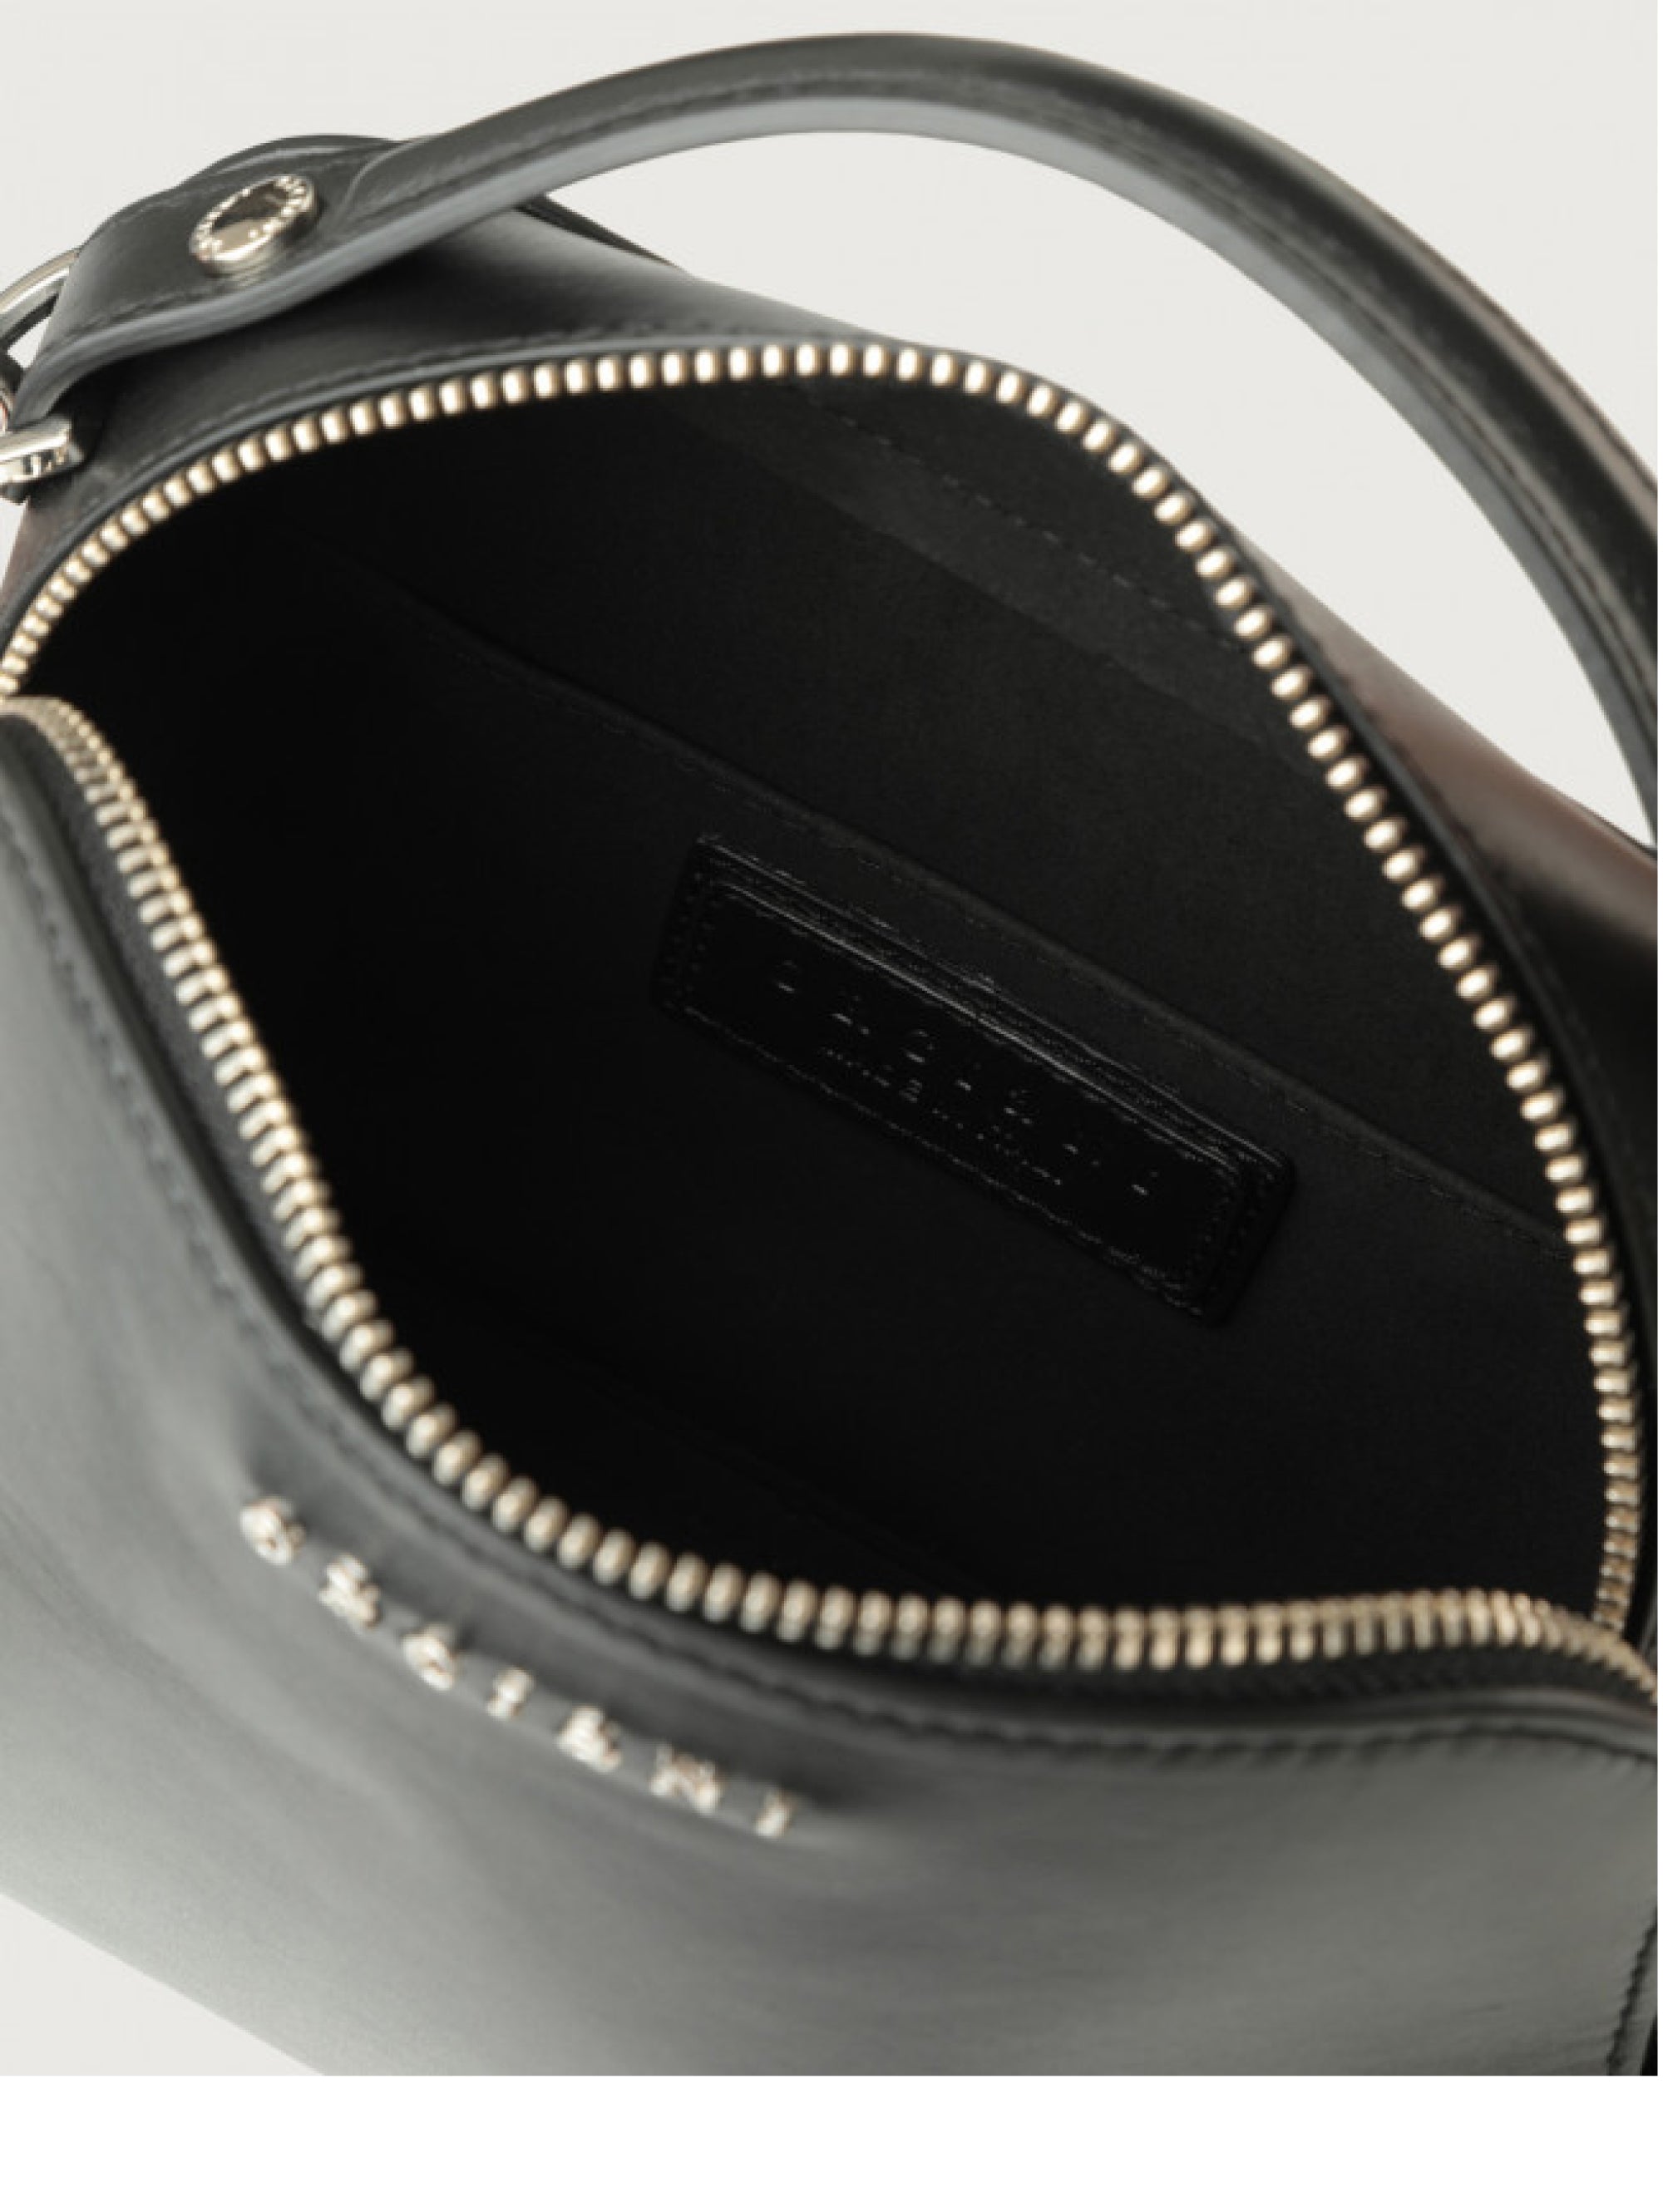 Chéri Handbag in Black Smooth Leather